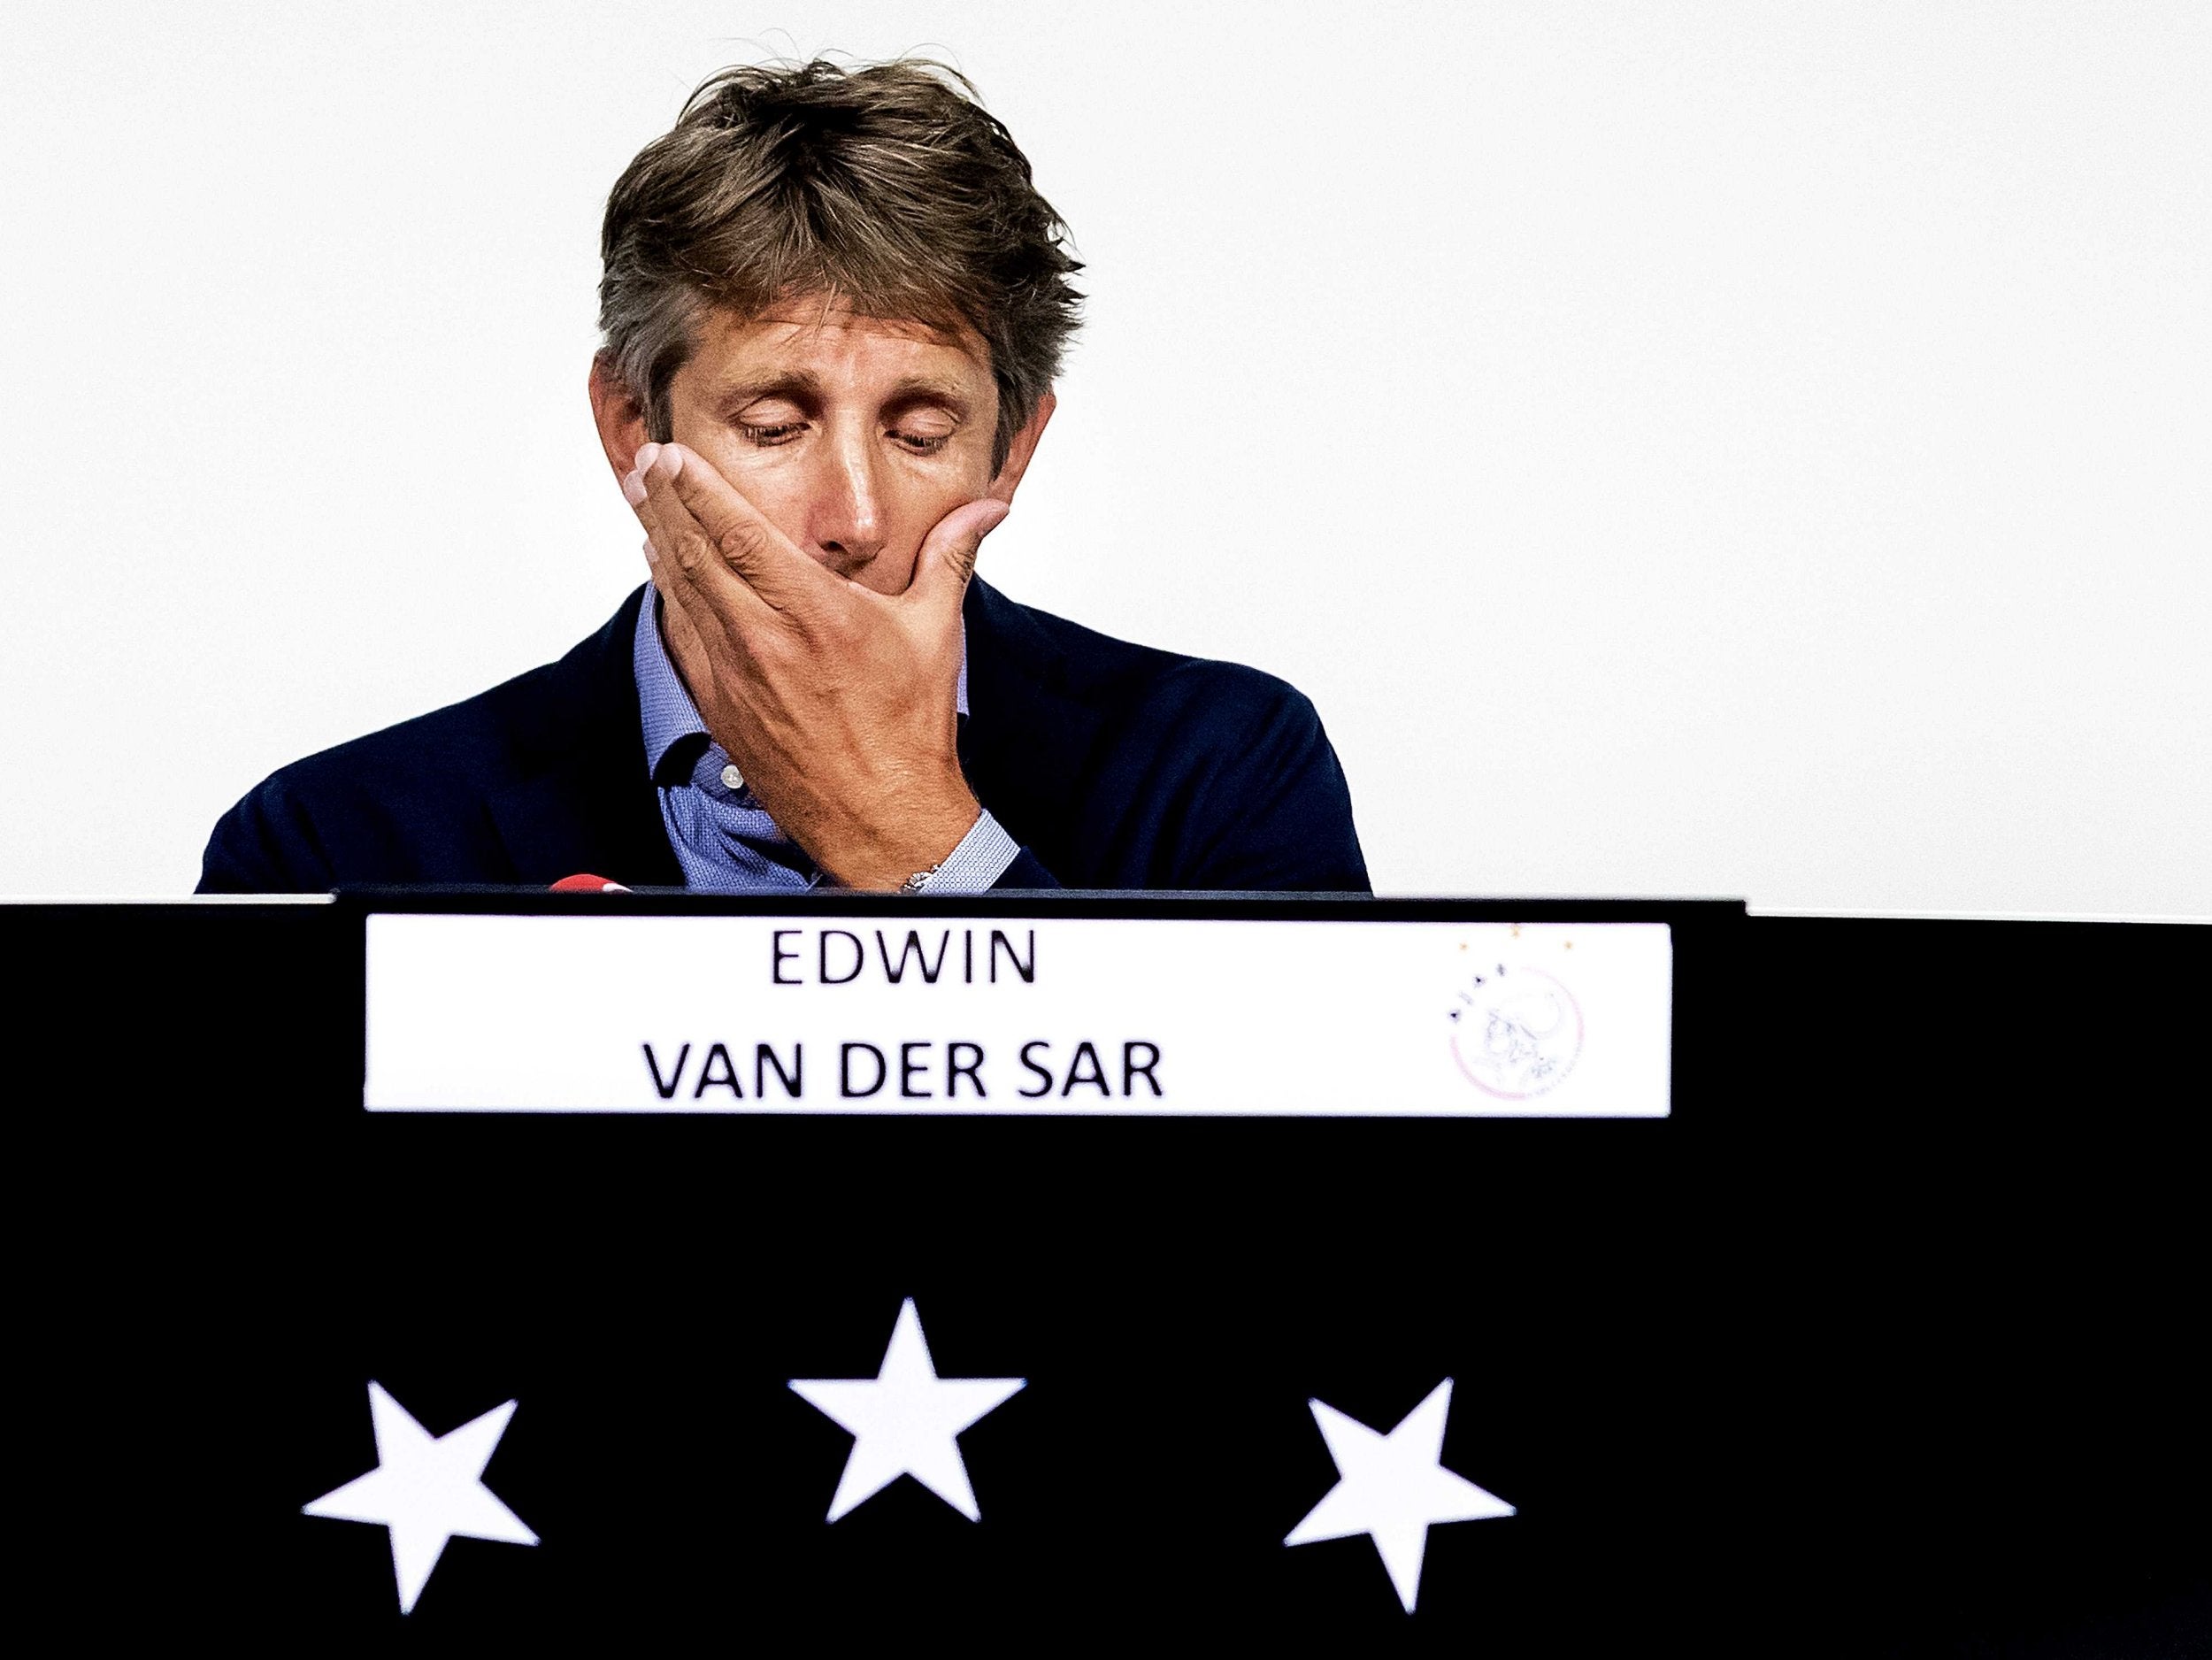 Ajax's CEO Edwin van der Sar speaks about Abdelhak Nouri during a press conference in Amsterdam